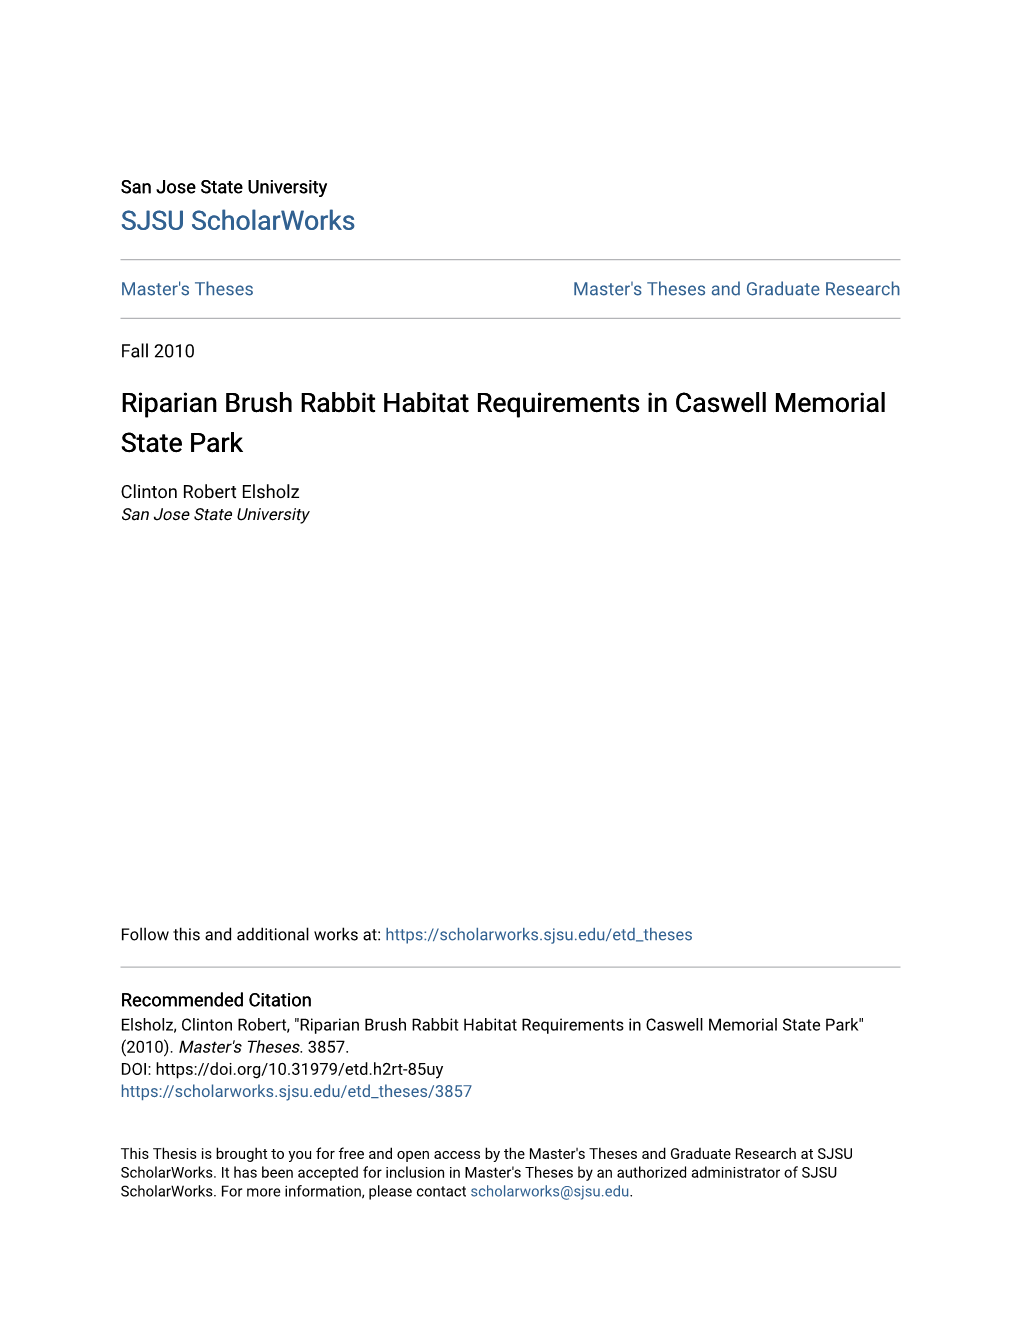 Riparian Brush Rabbit Habitat Requirements in Caswell Memorial State Park